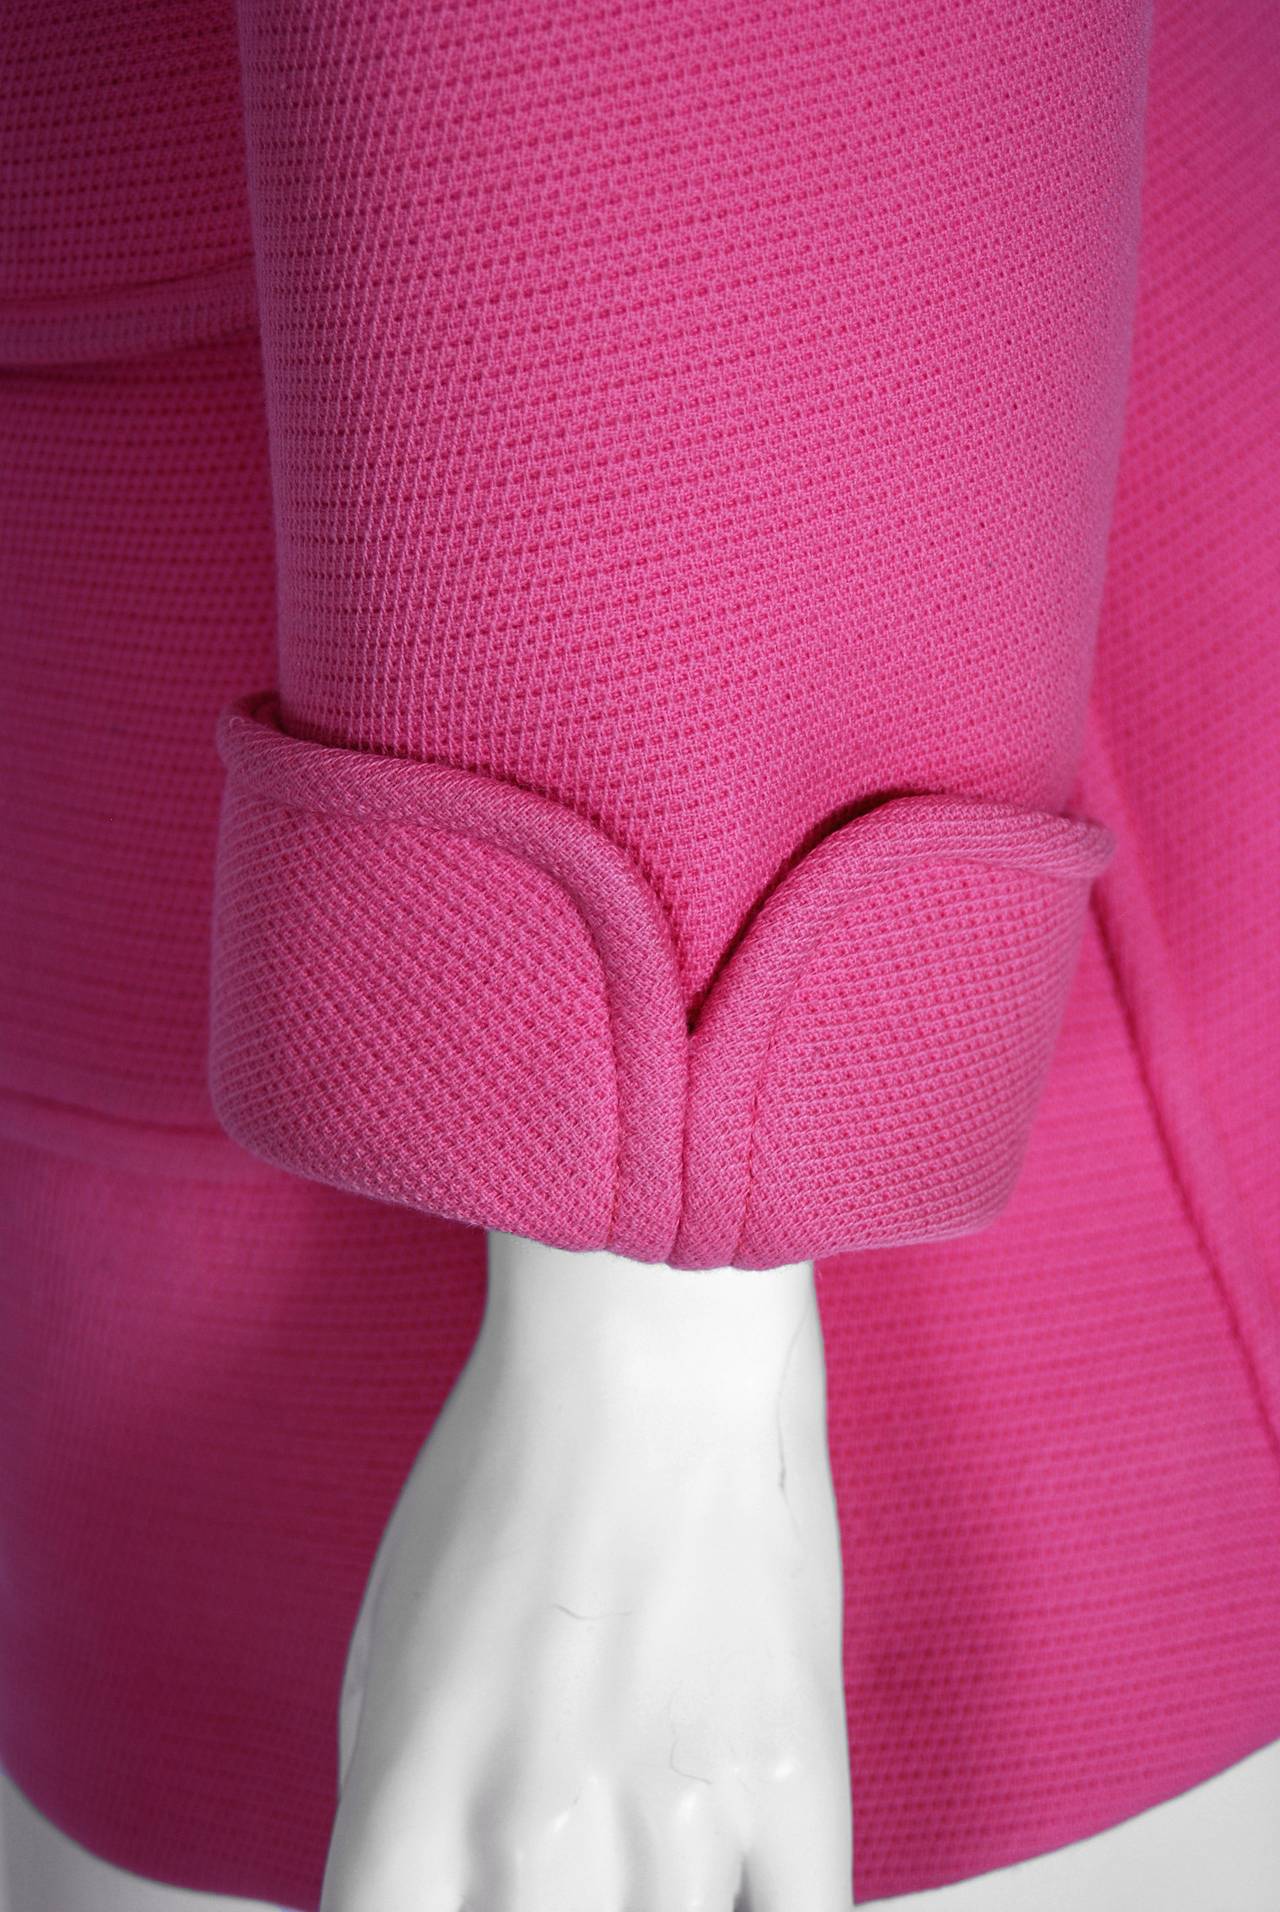 Women's 1967 Courreges Couture Bubblegum-Pink Wool Mod Space-Age Tailored Coat Jacket